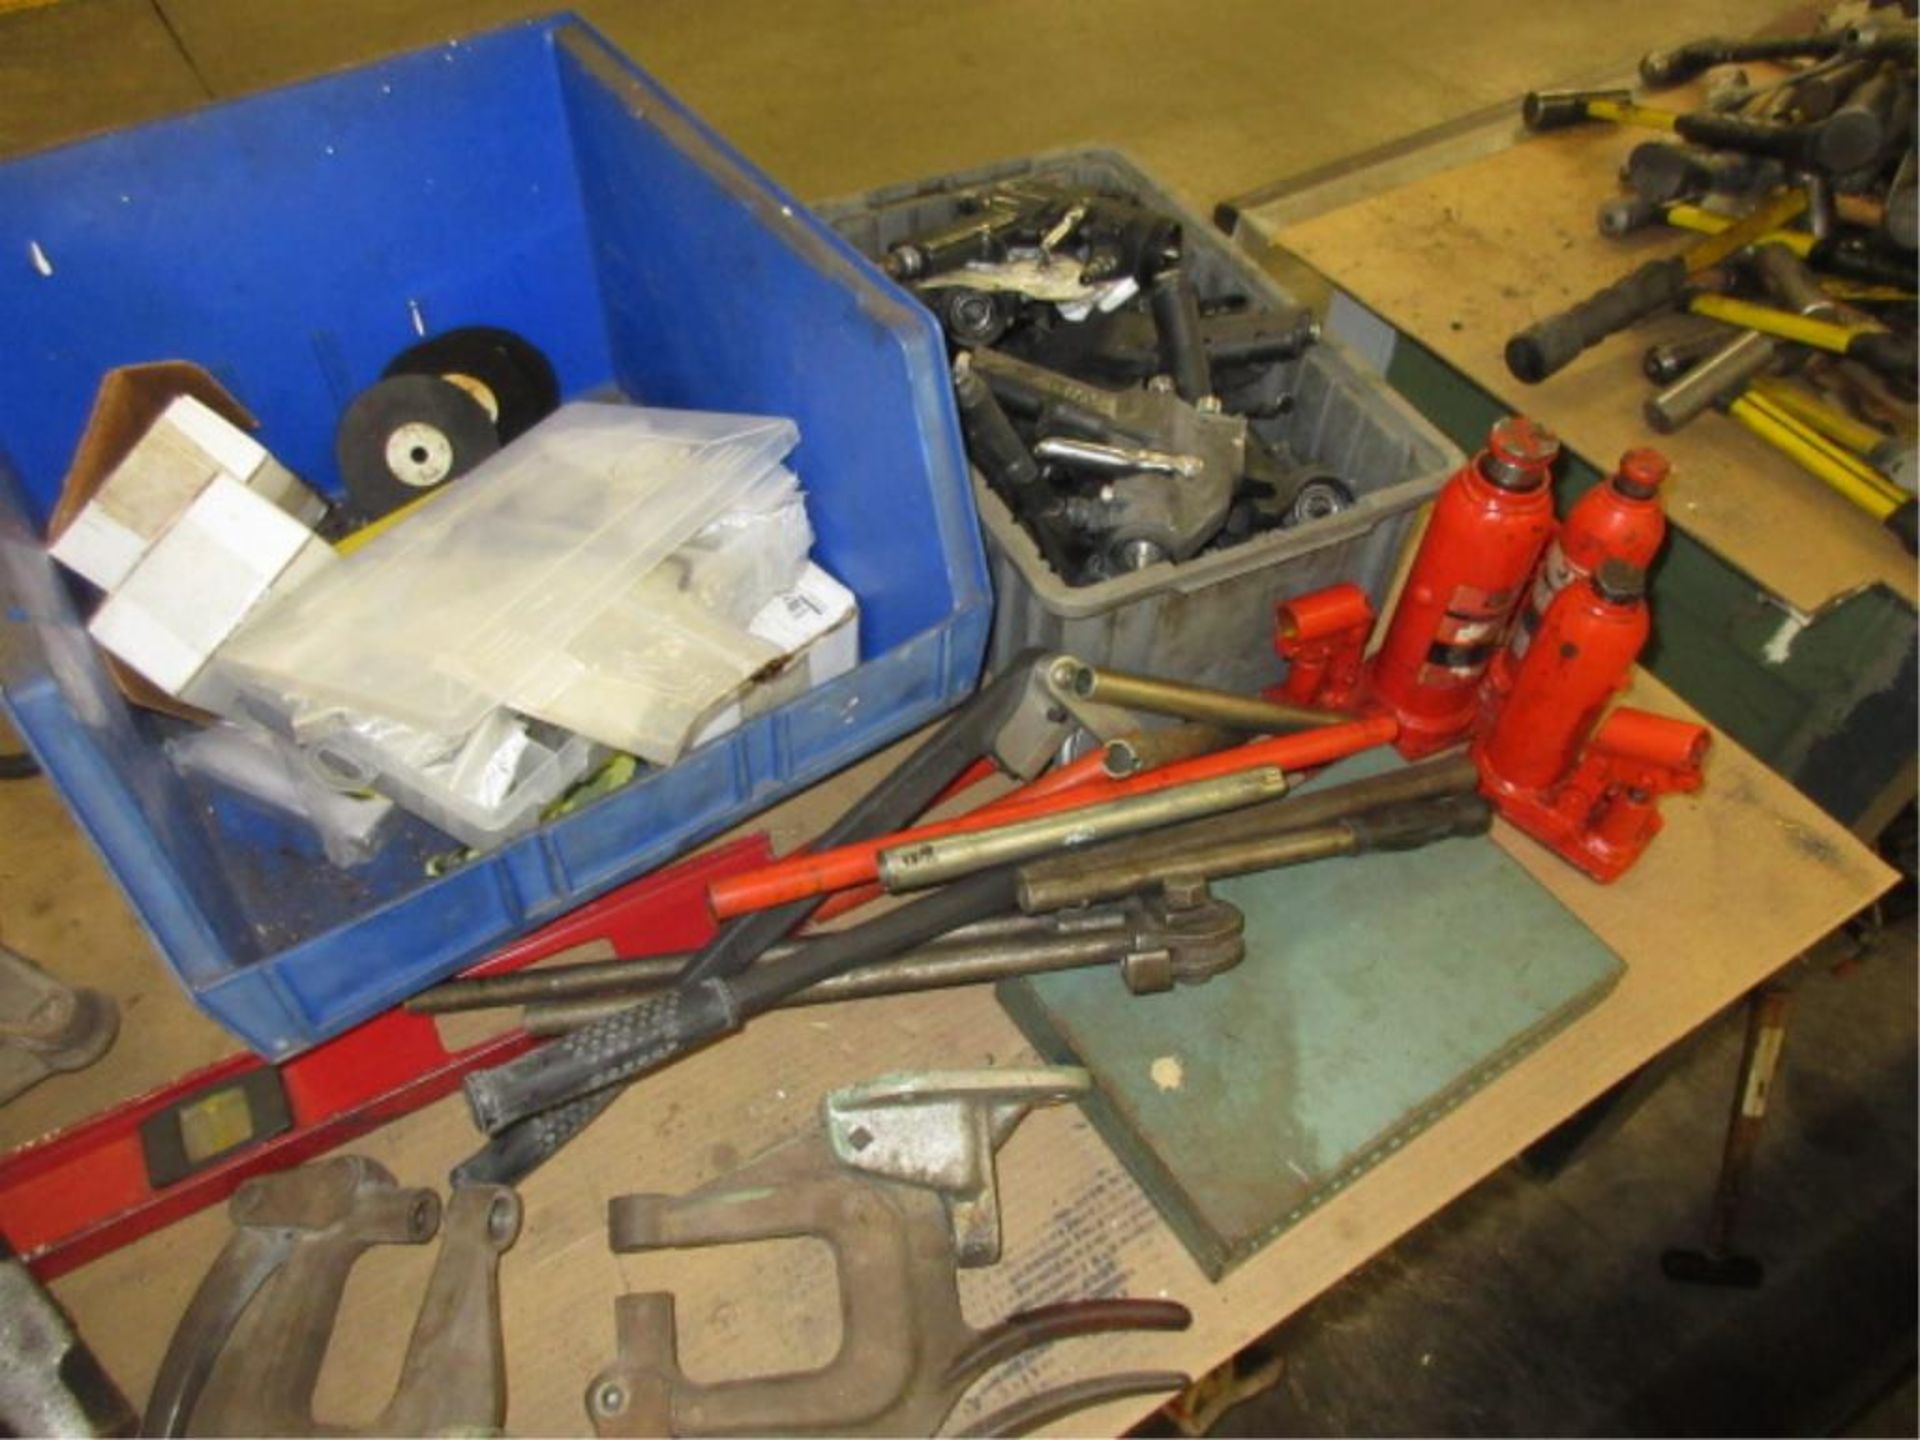 Shop Tools. Lot Assorted Shop Tools, includes tool box, hammers, mallets, solder guns, bottle jacks, - Image 4 of 8